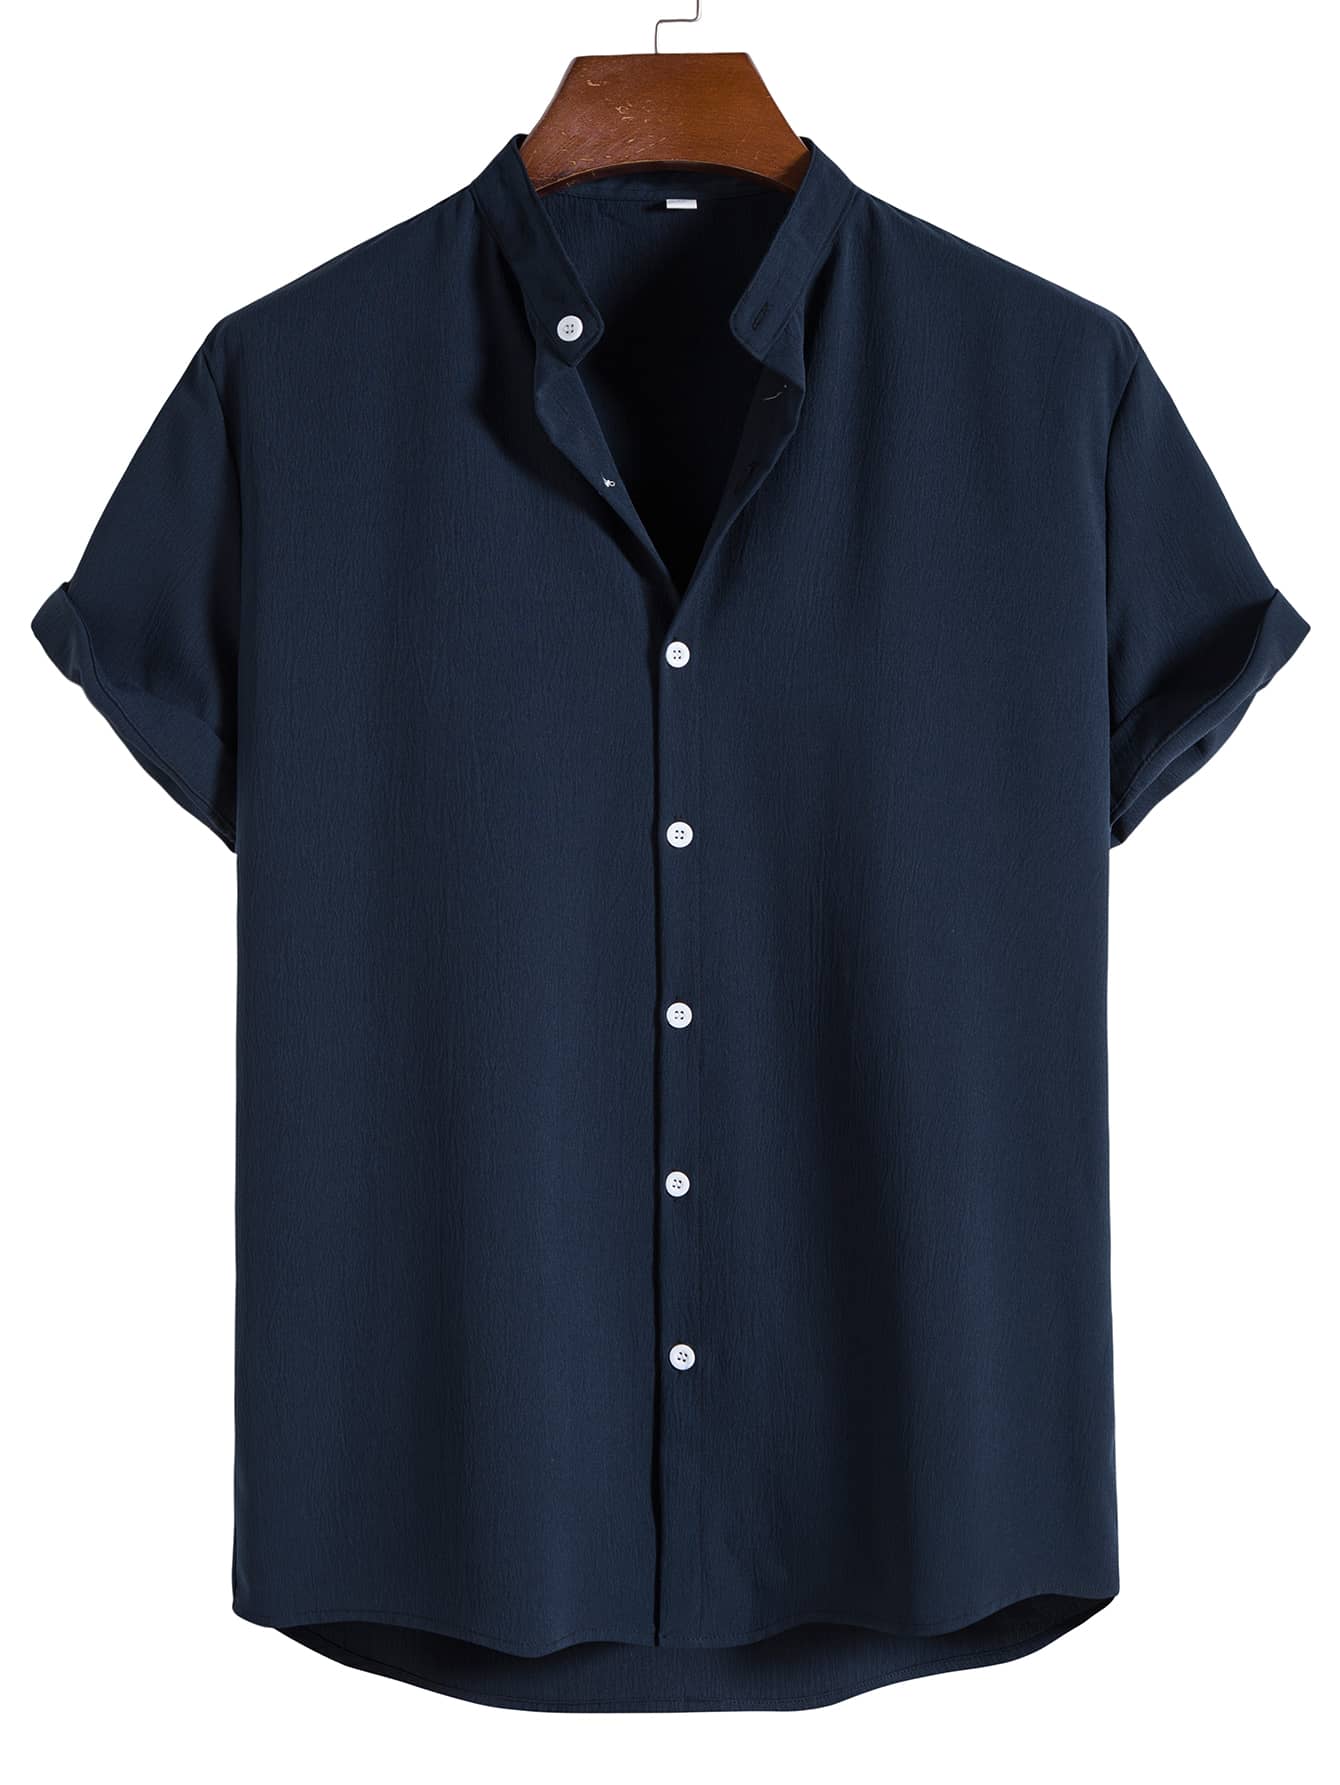 Мужская текстурированная рубашка с коротким рукавом Manfinity Homme на пуговицах спереди, темно-синий